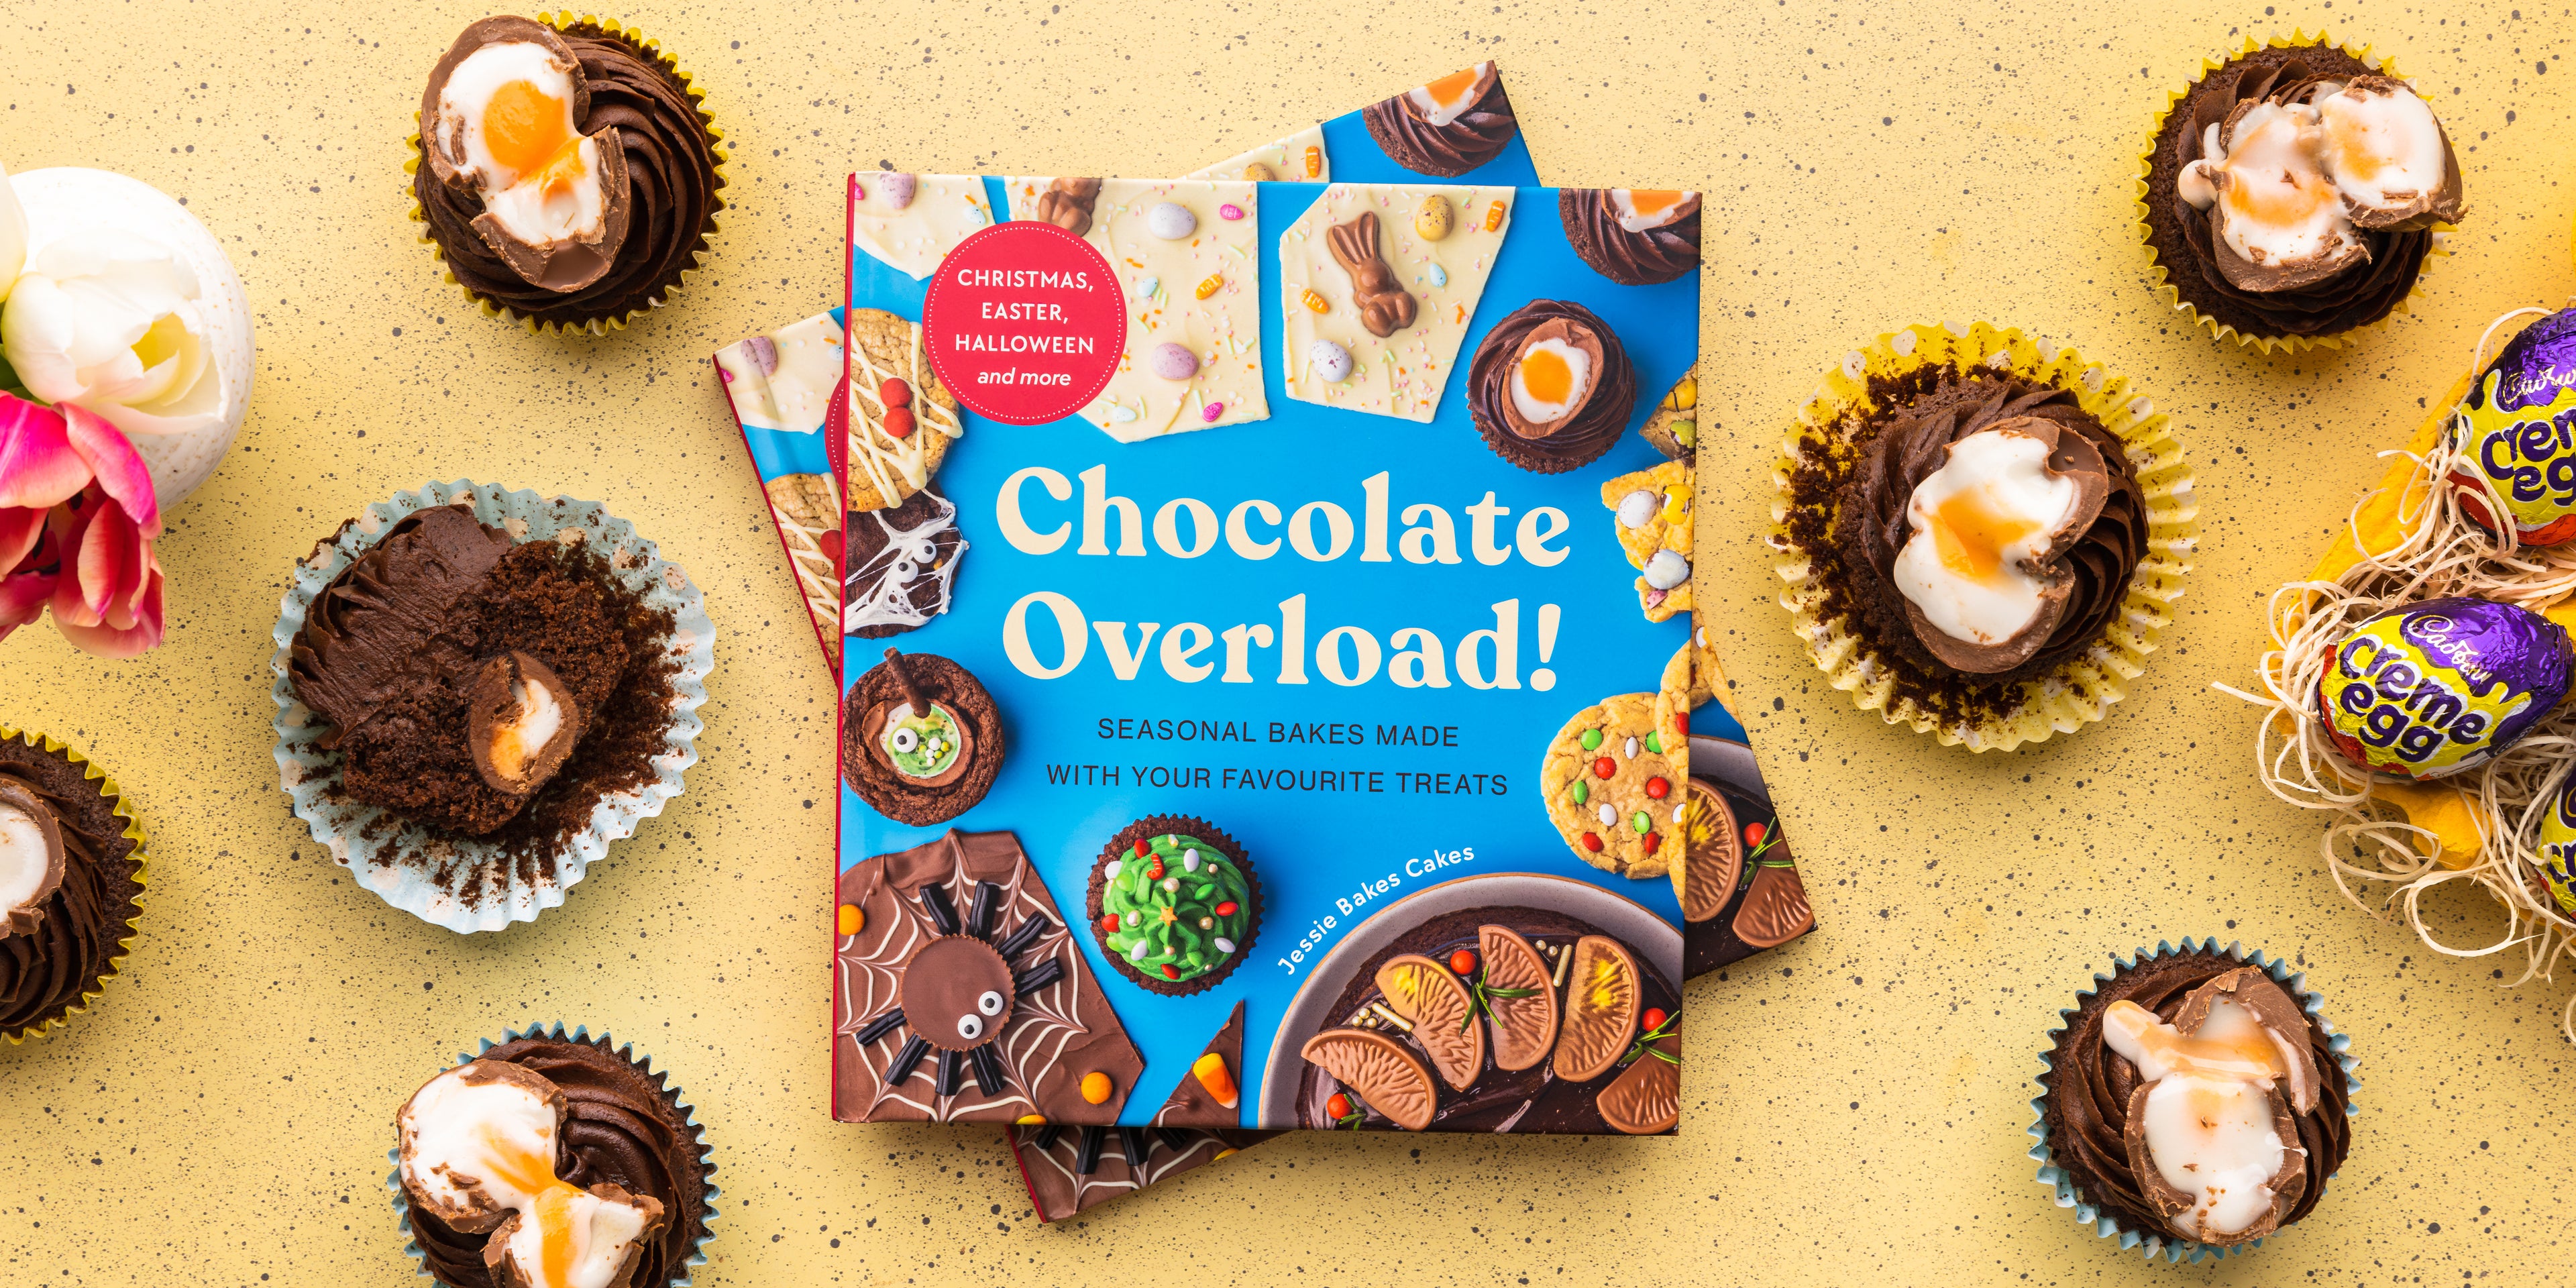 Chocolate cupcakes surrounding chocolate overload recipe book